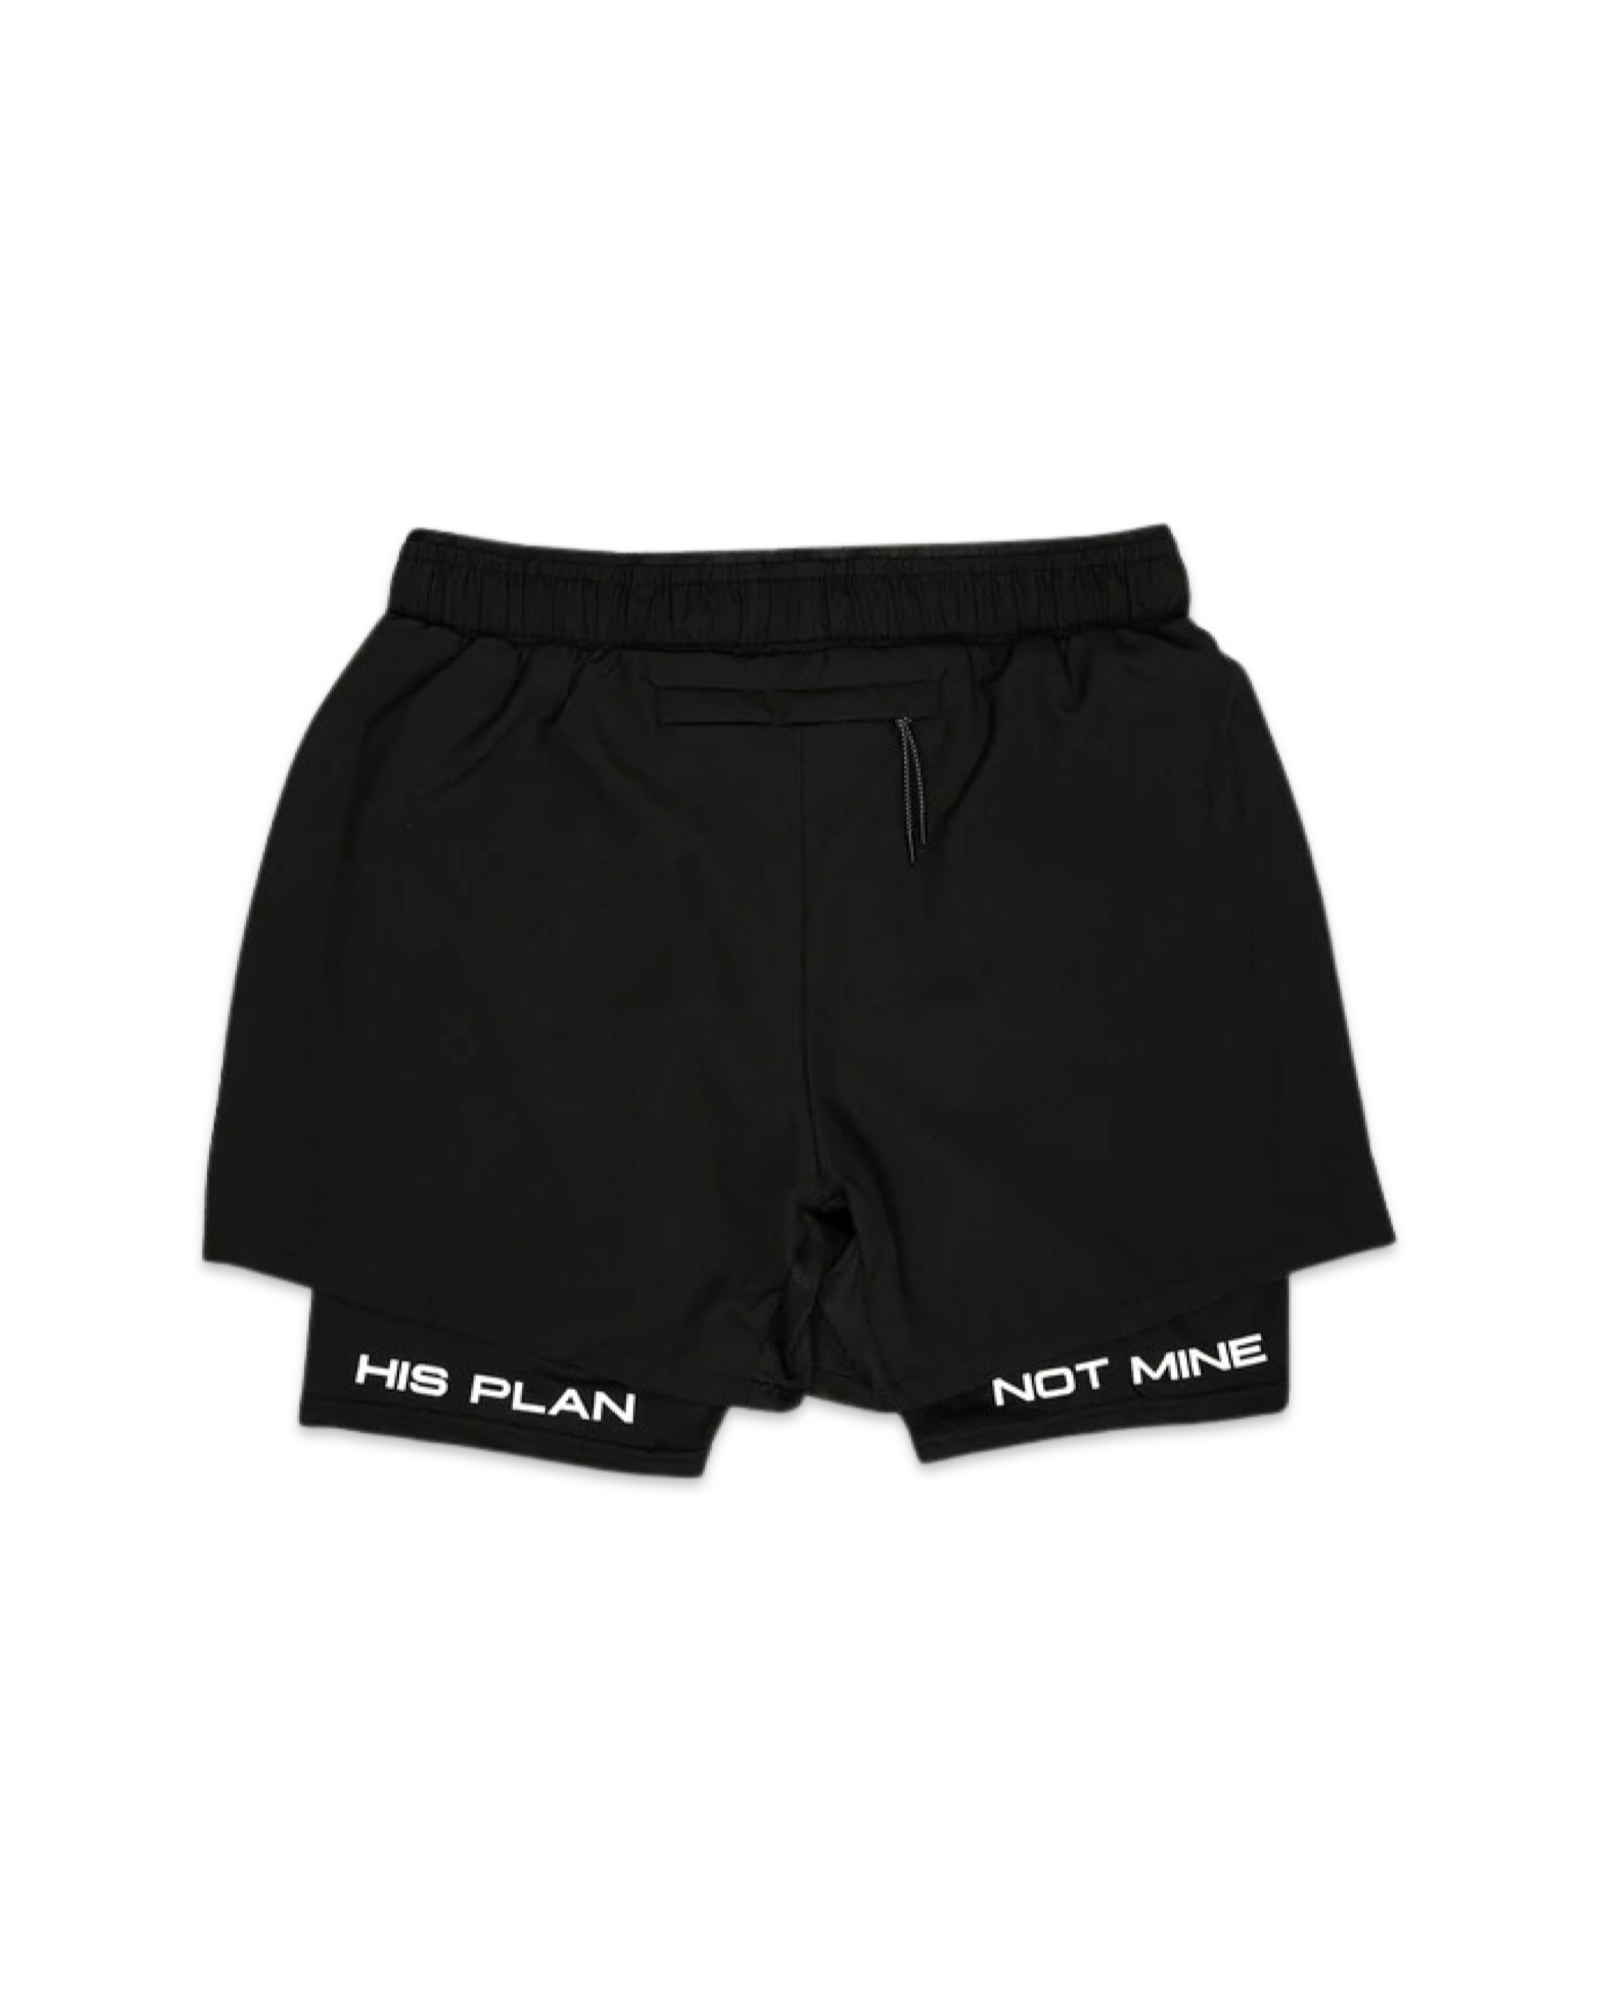 Basic b*tch'' black cool unisex 2-in-1 running & fitness shorts